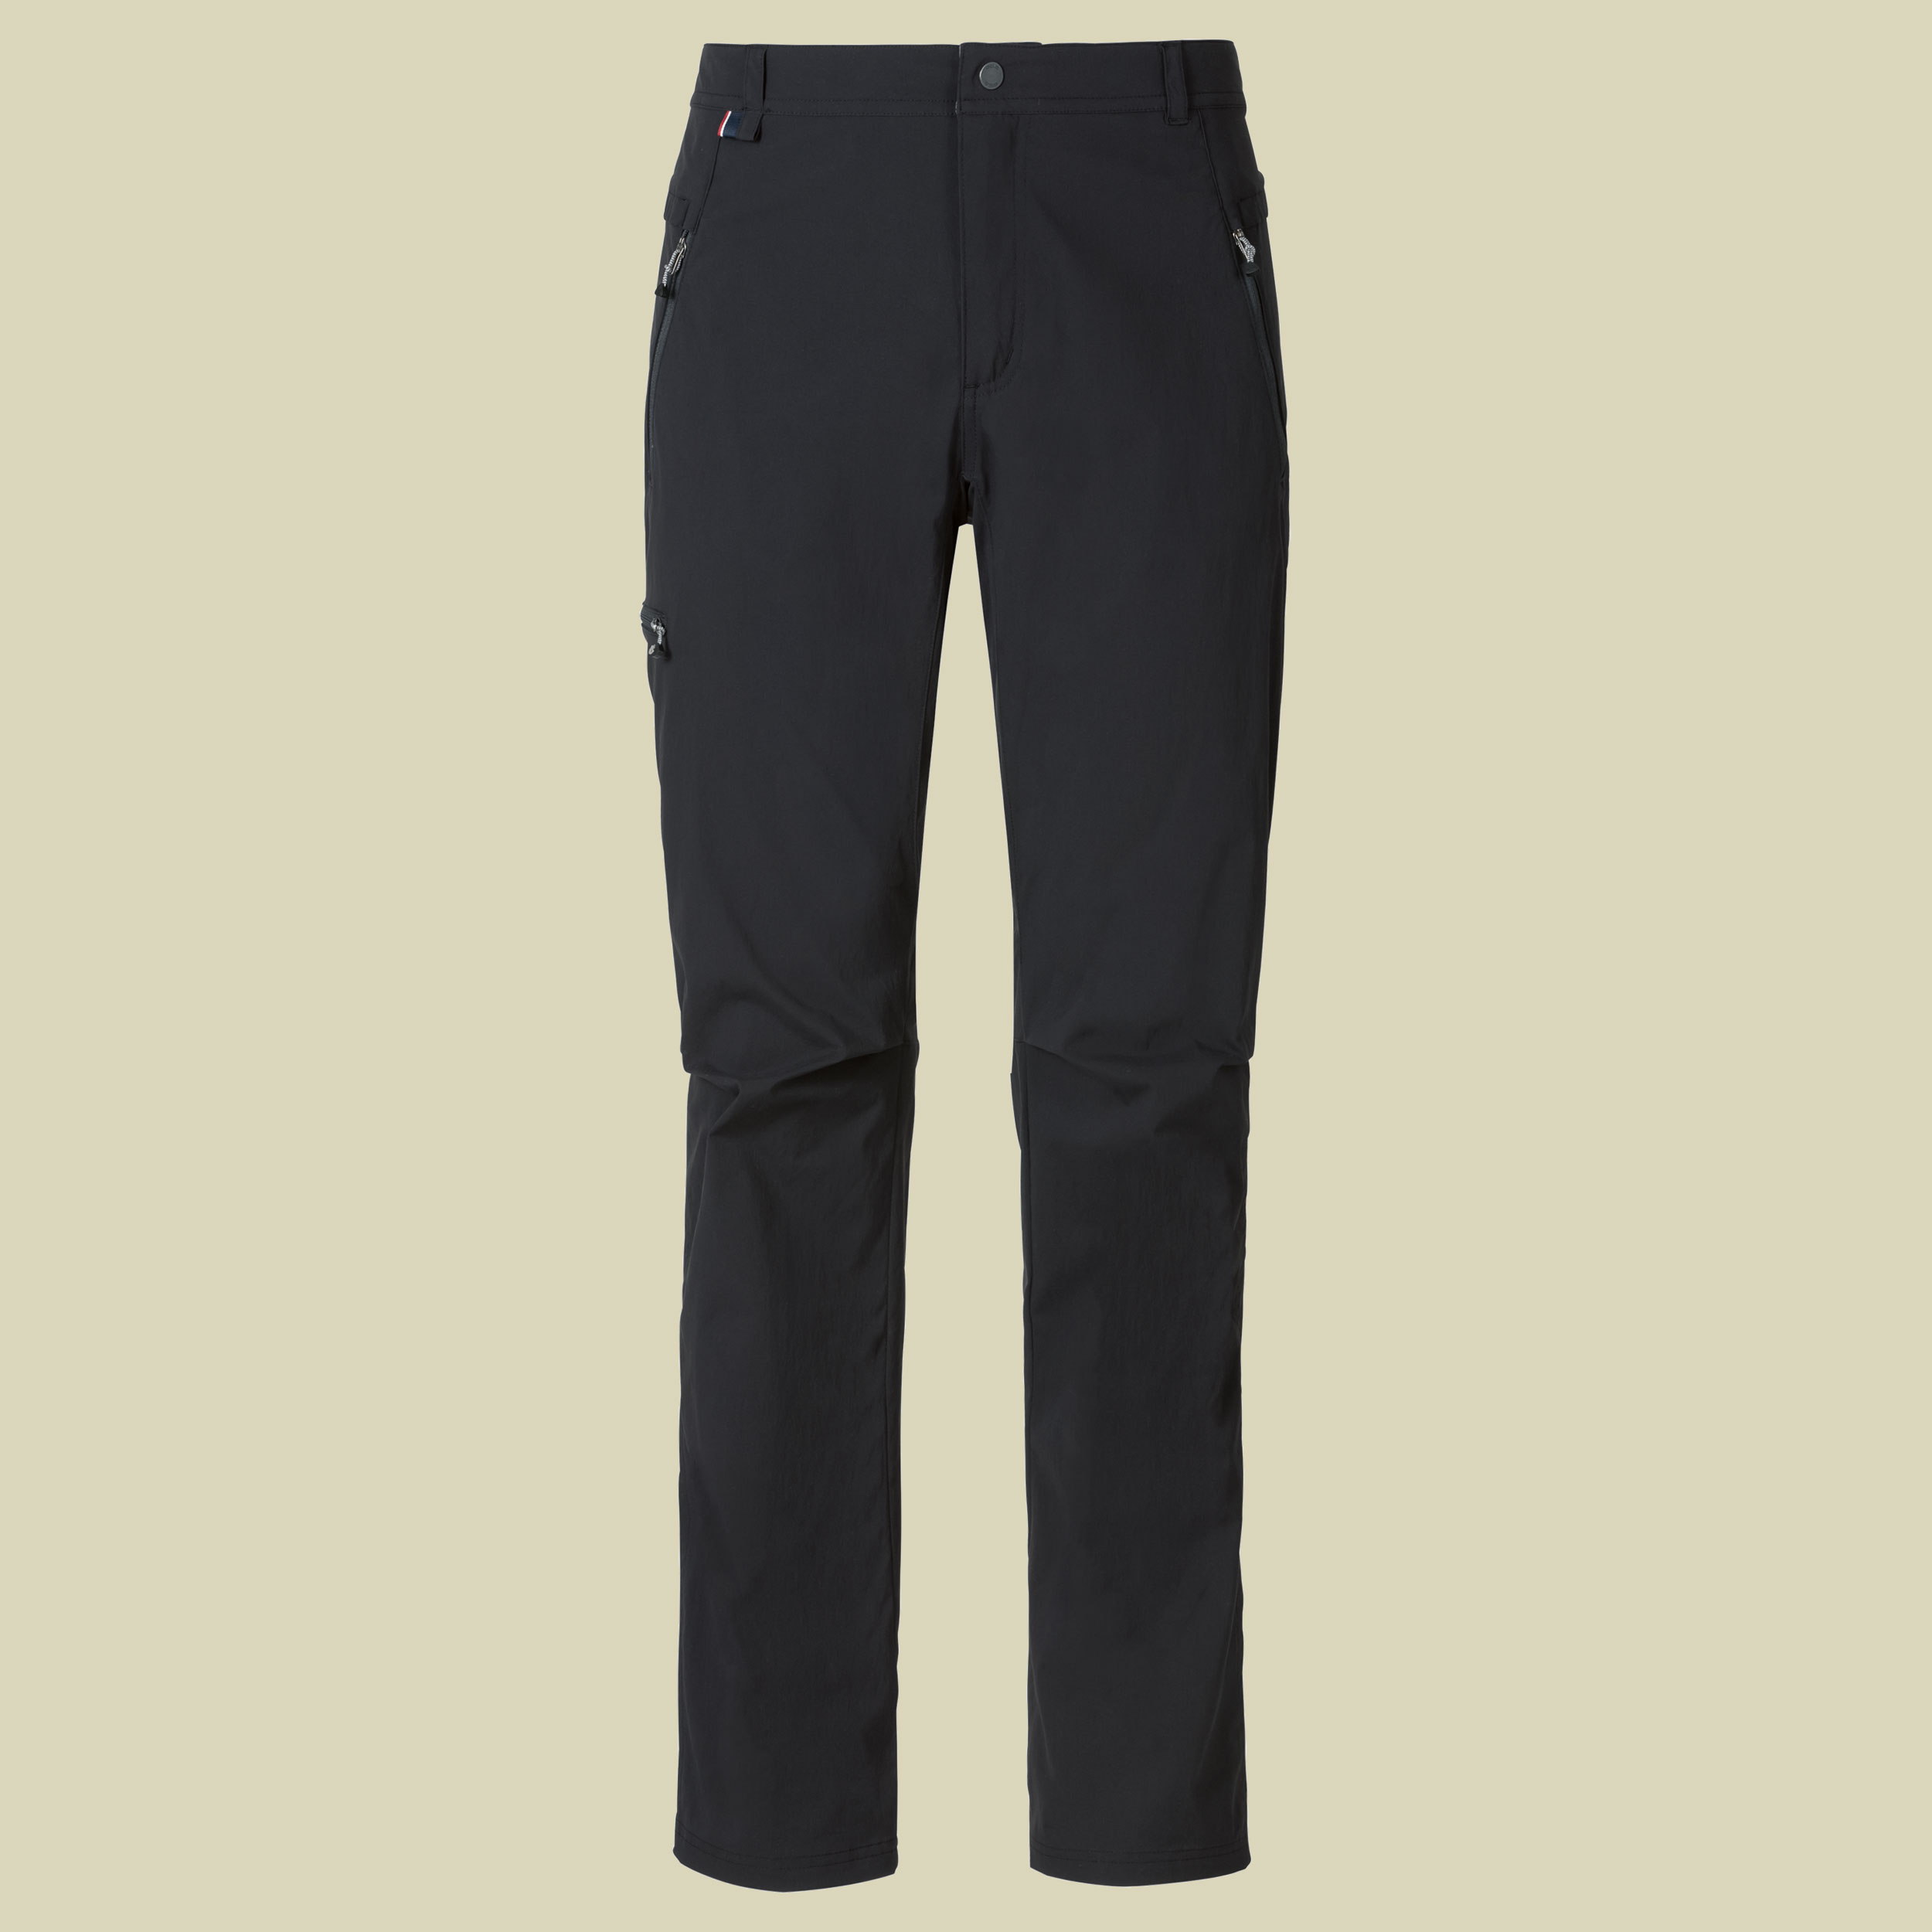 Pants Wedgemount men Größe 46 Farbe black